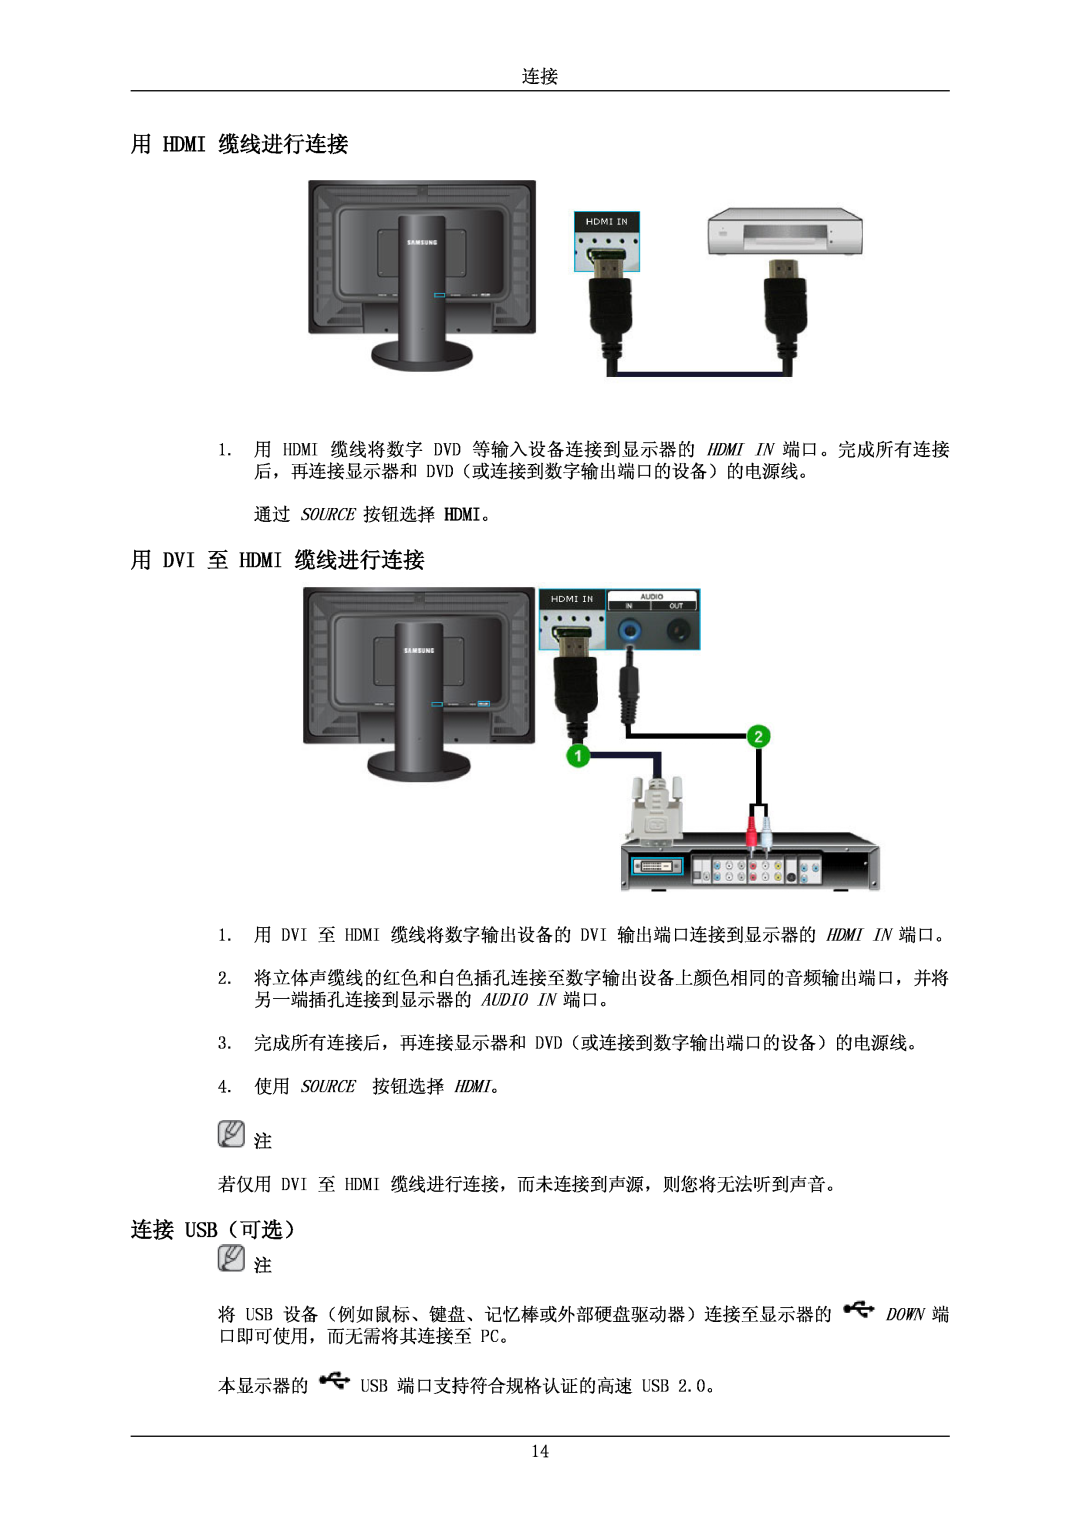 Samsung LS24KIEEFV/EDC, LS26KIERBV/EDC manual 用 Hdmi 缆线进行连接, 用 Dvi 至 Hdmi 缆线进行连接, 连接 Usb（可选）, 4. 使用 SOURCE 按钮选择 HDMI。 